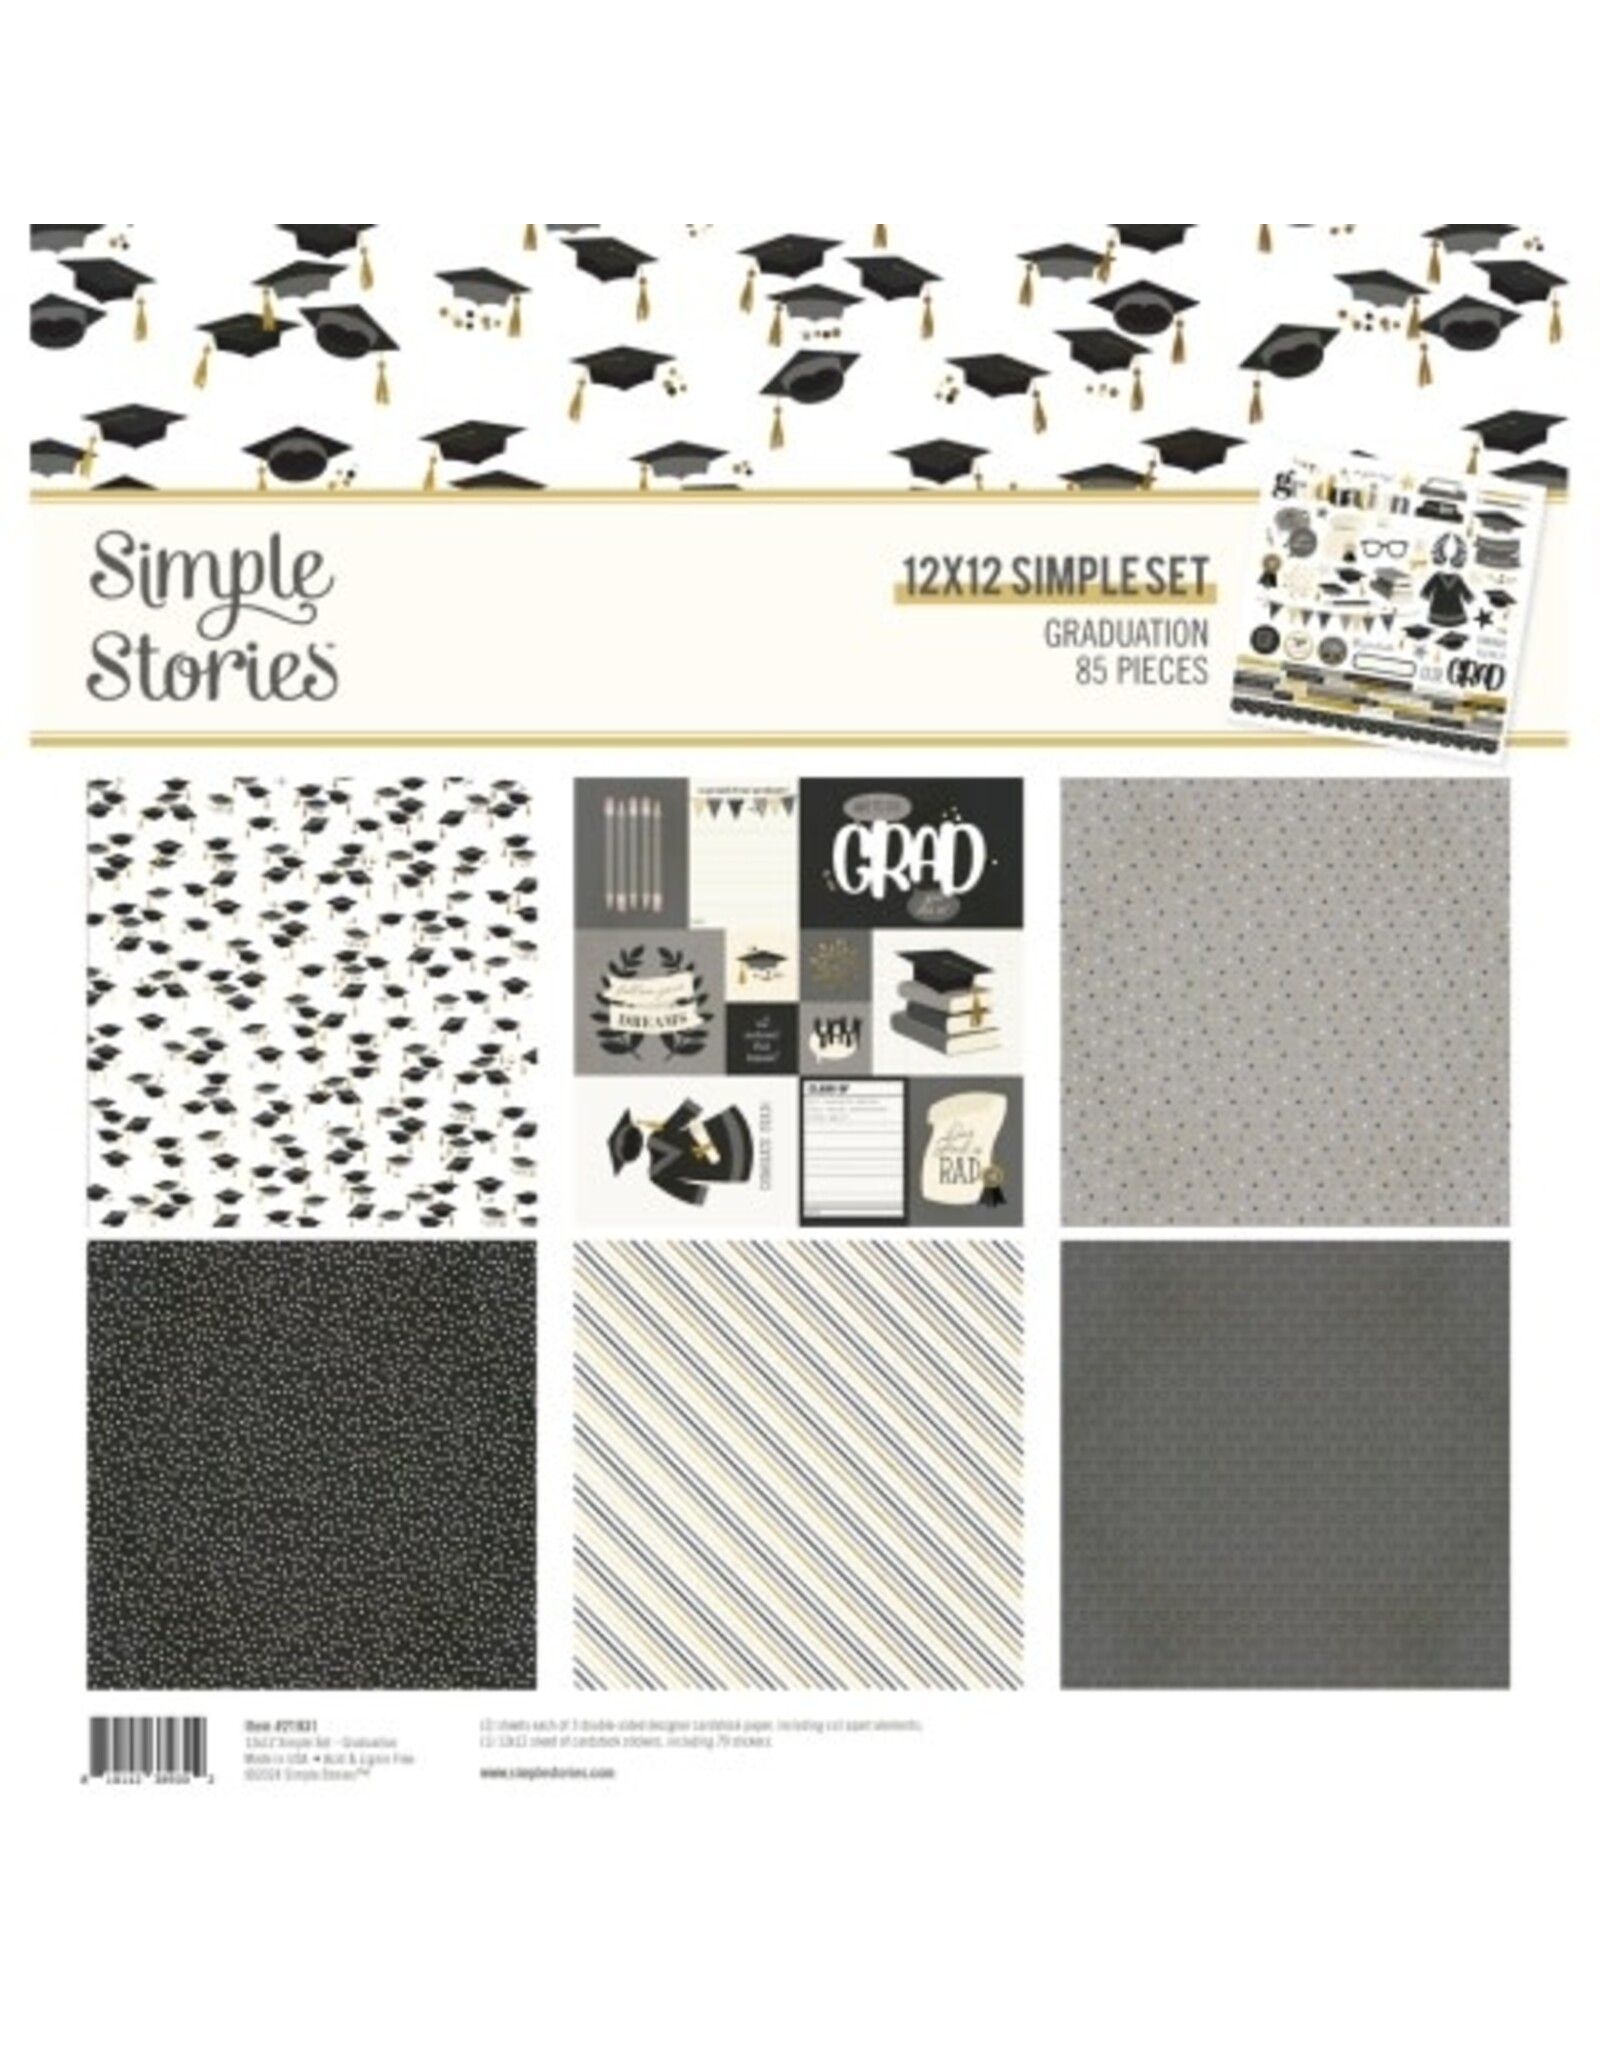 Simple Stories Graduation 12x12 Collection Kit